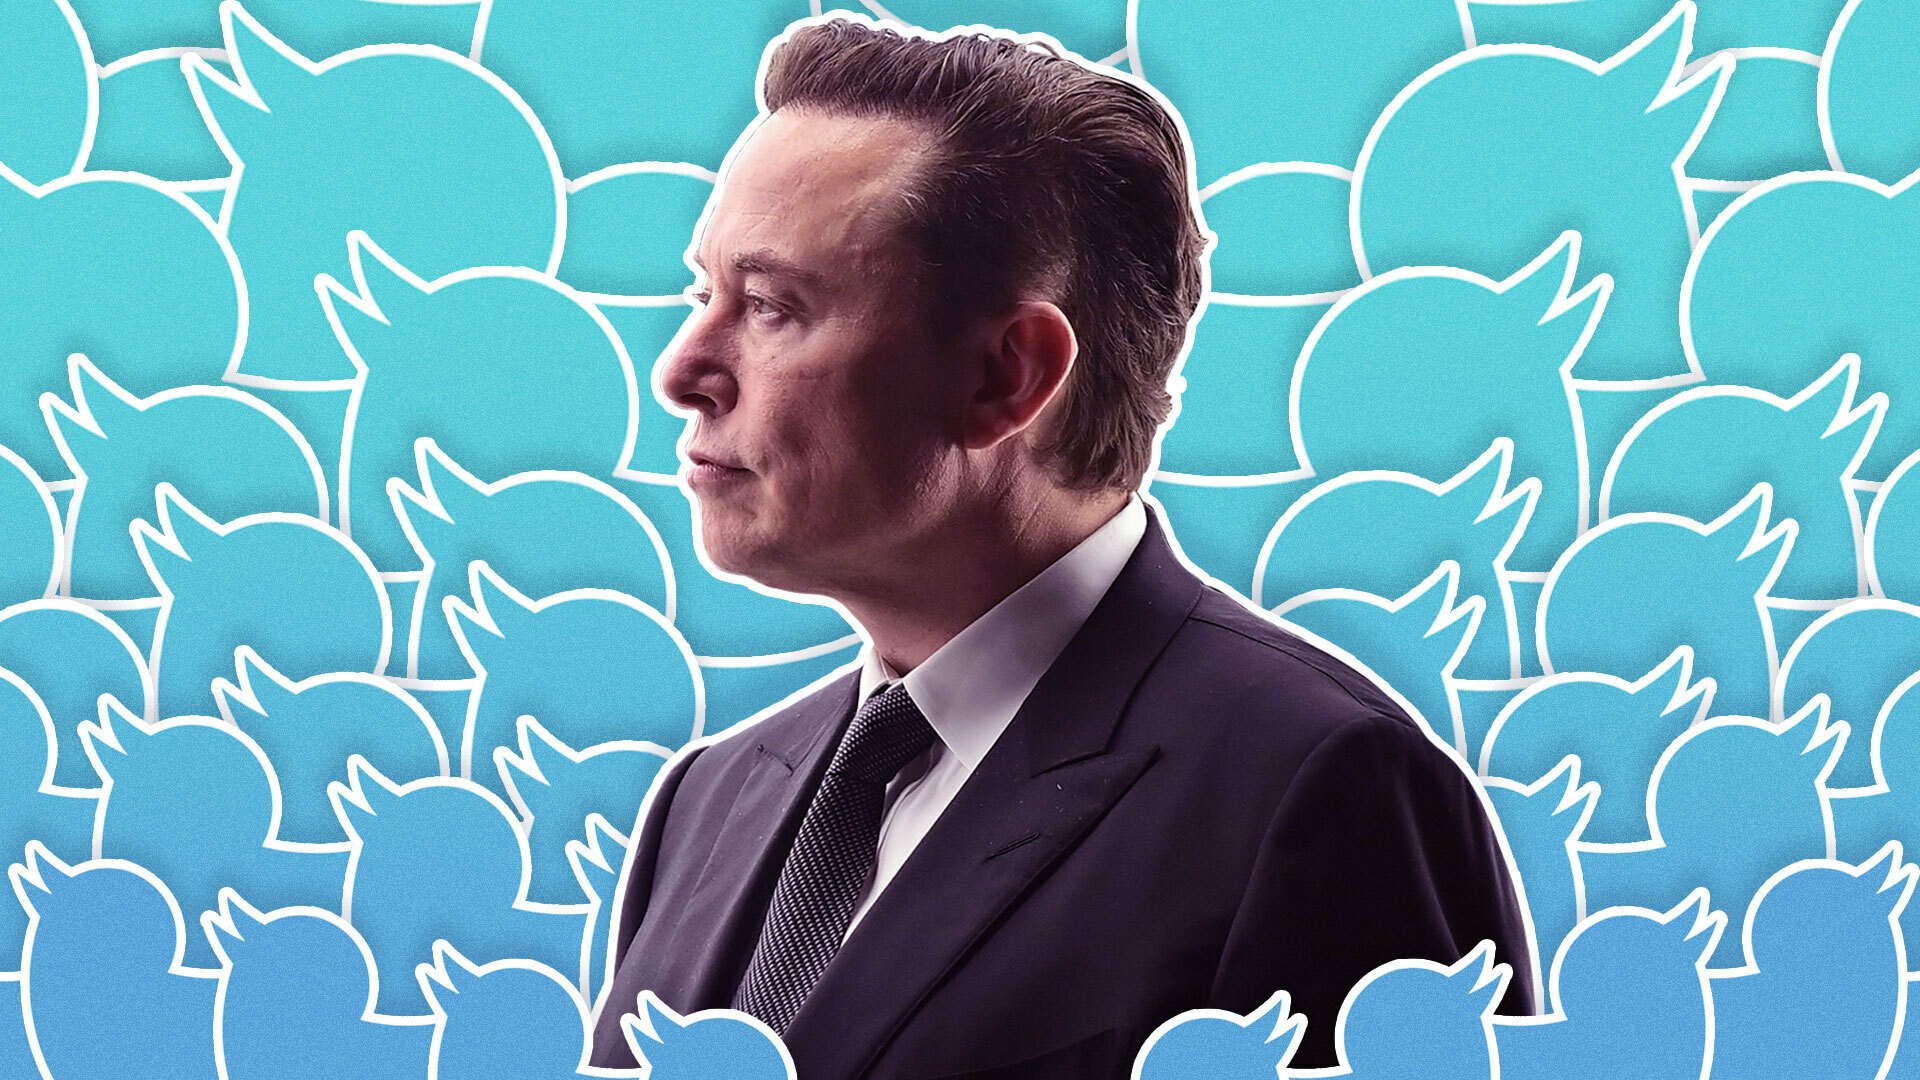 Elon Musk against a backdrop of Twitter birds.